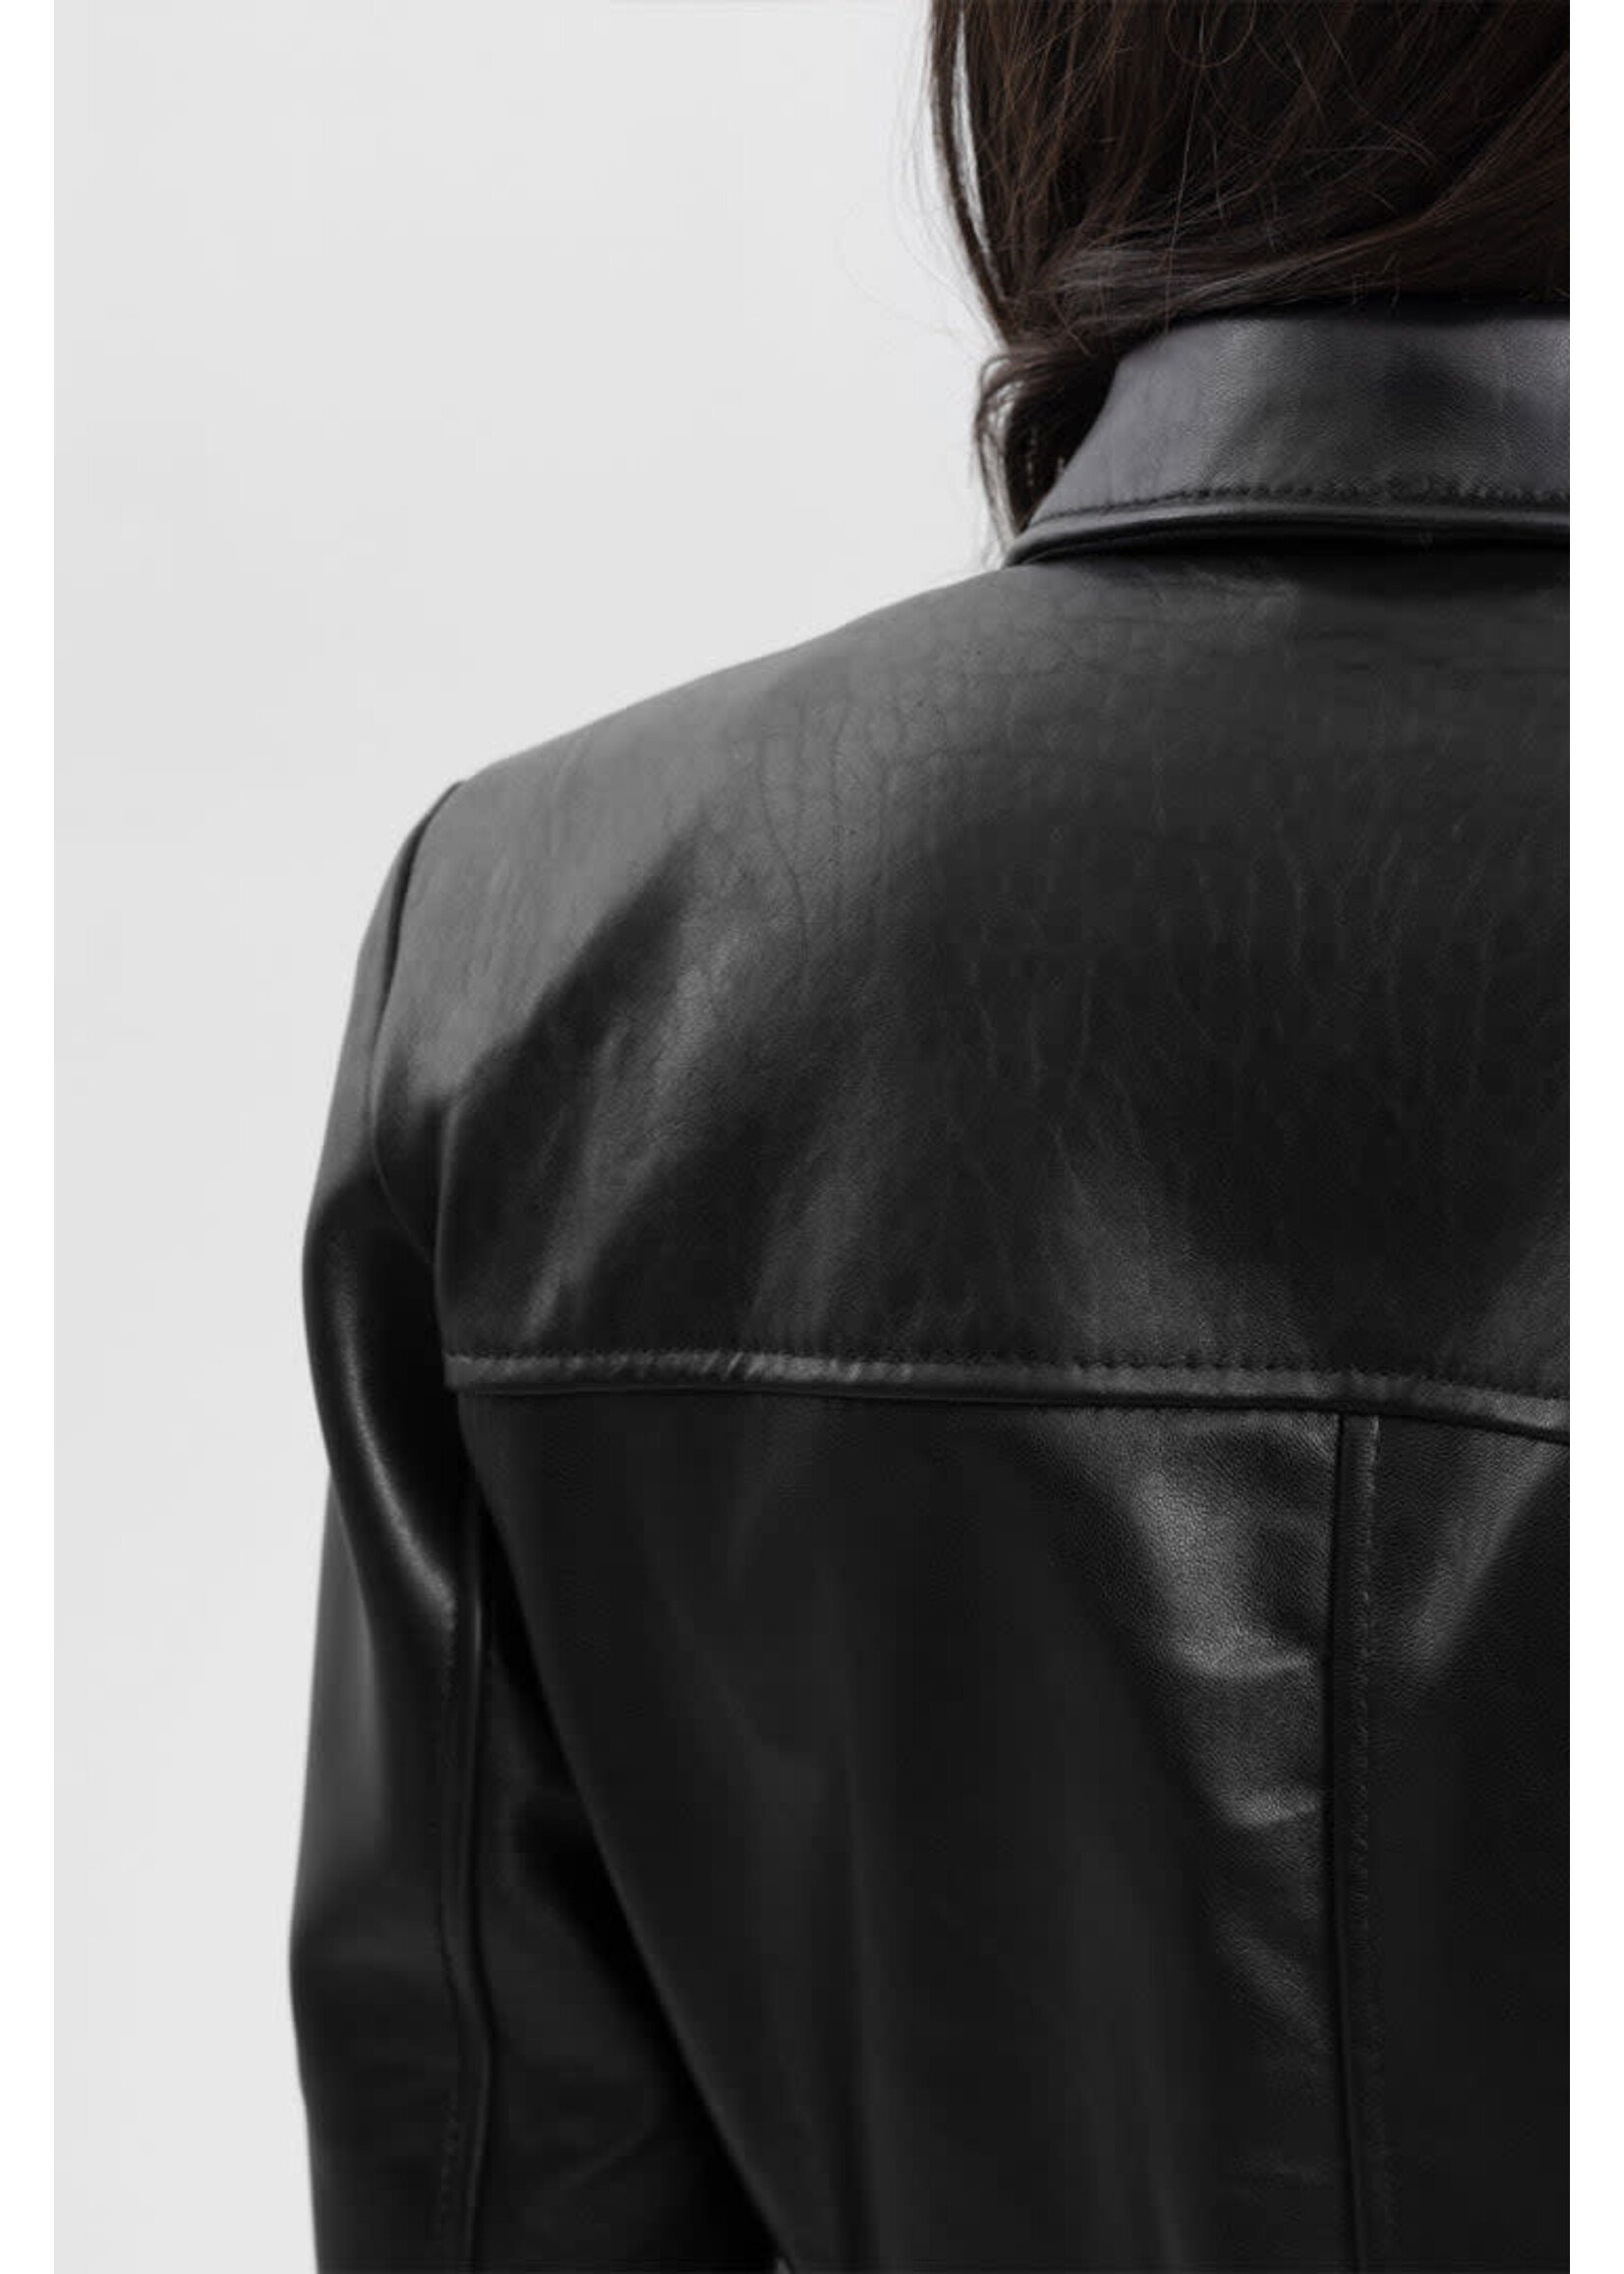 Whet Blu Janely Womens Black Leather Belted Jacket